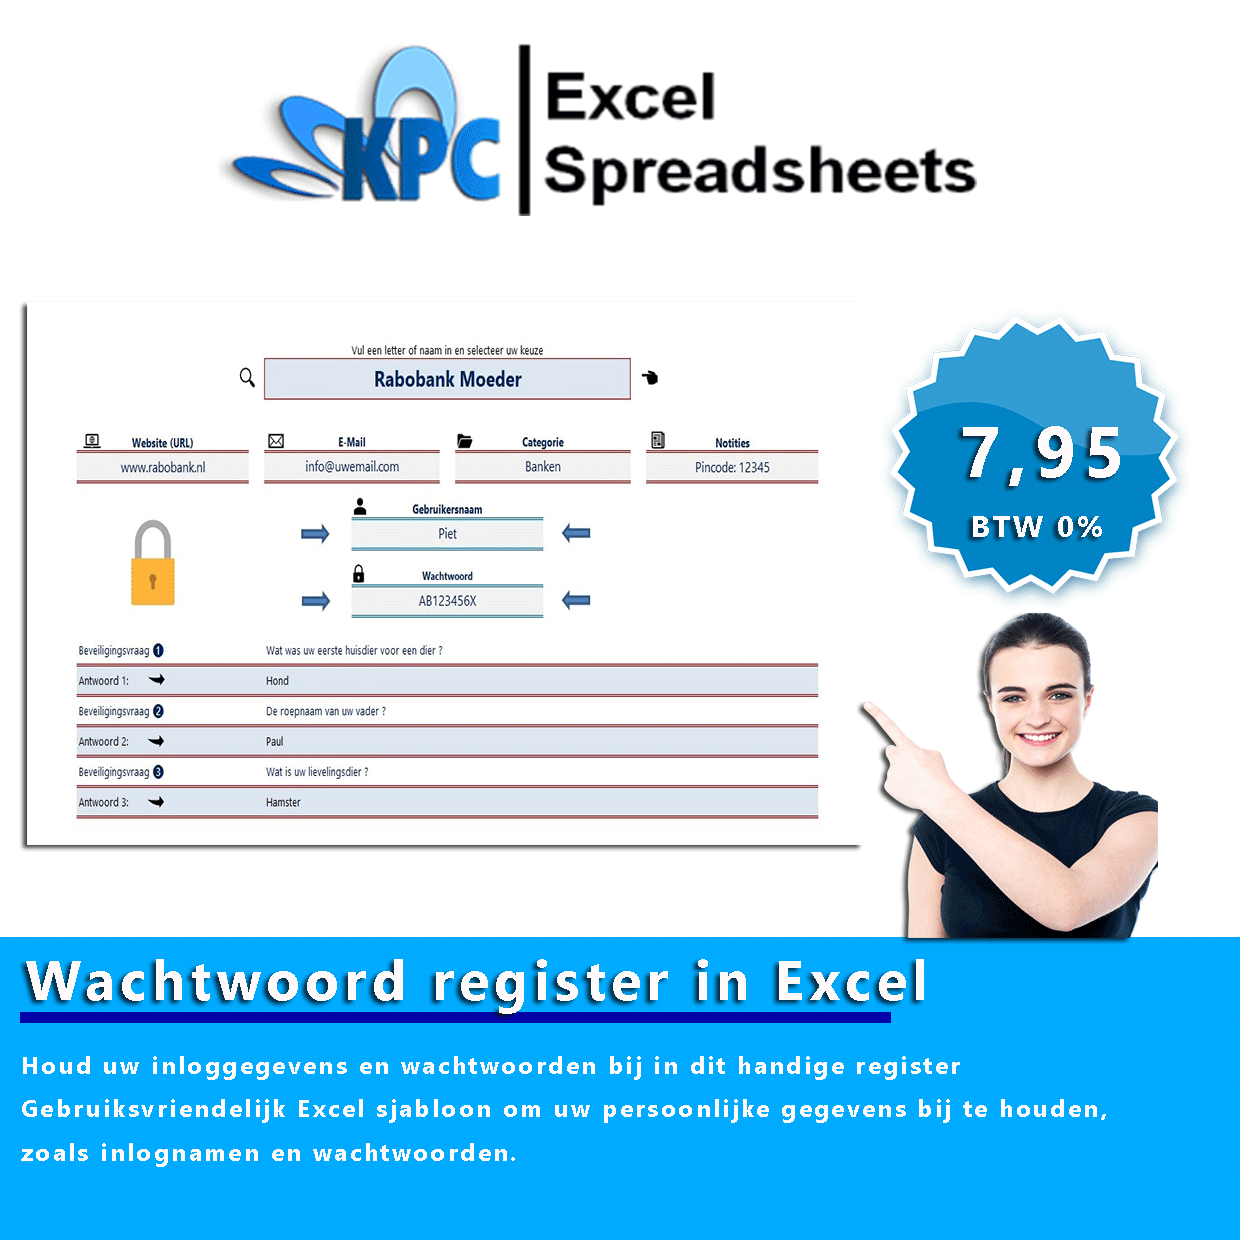 Wachtwoord register in Excel